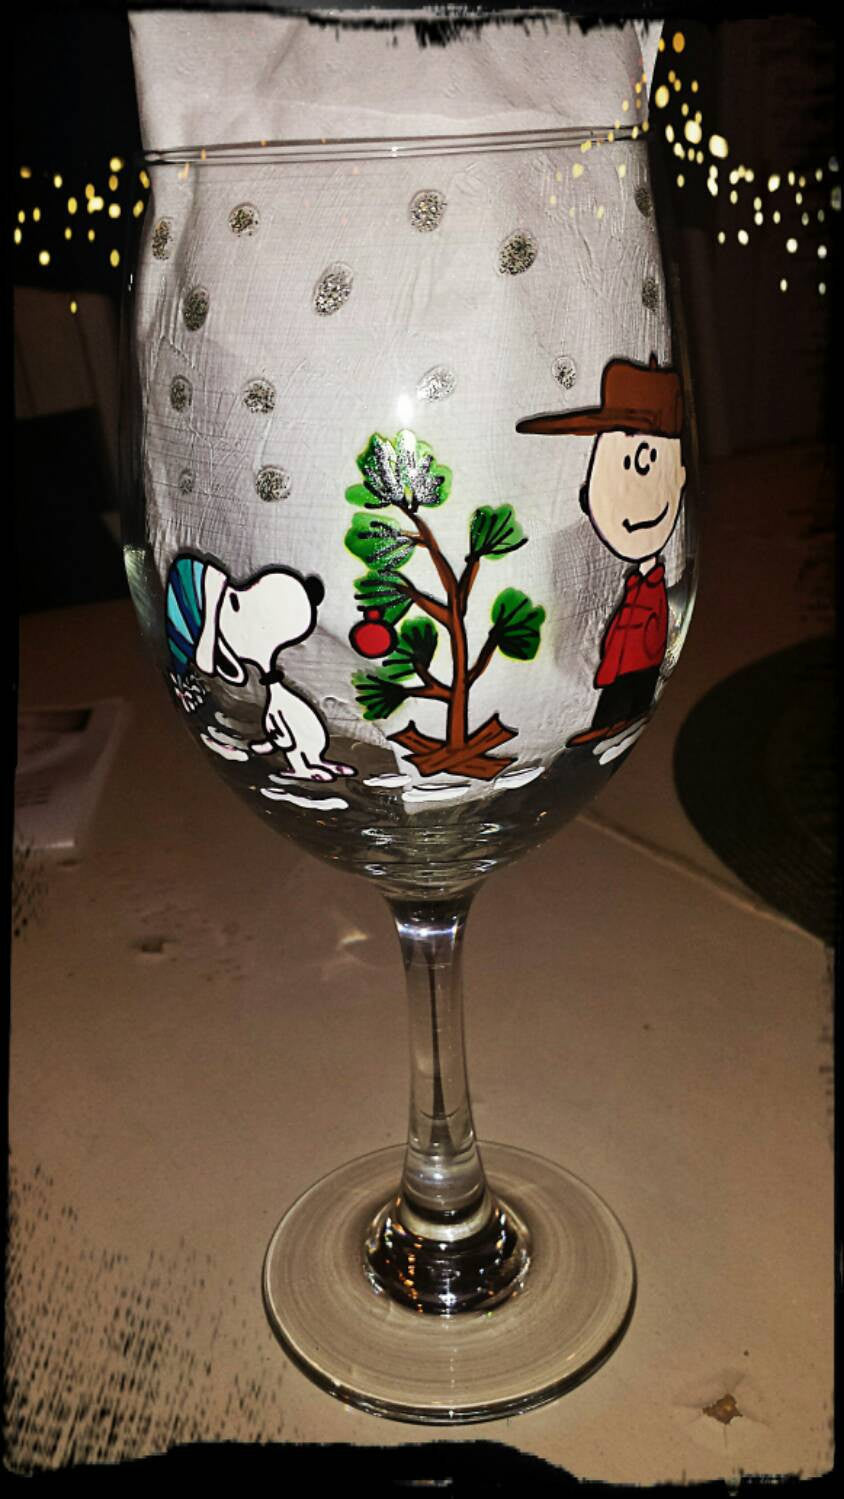 Peanuts Snoopy Drinking Glass